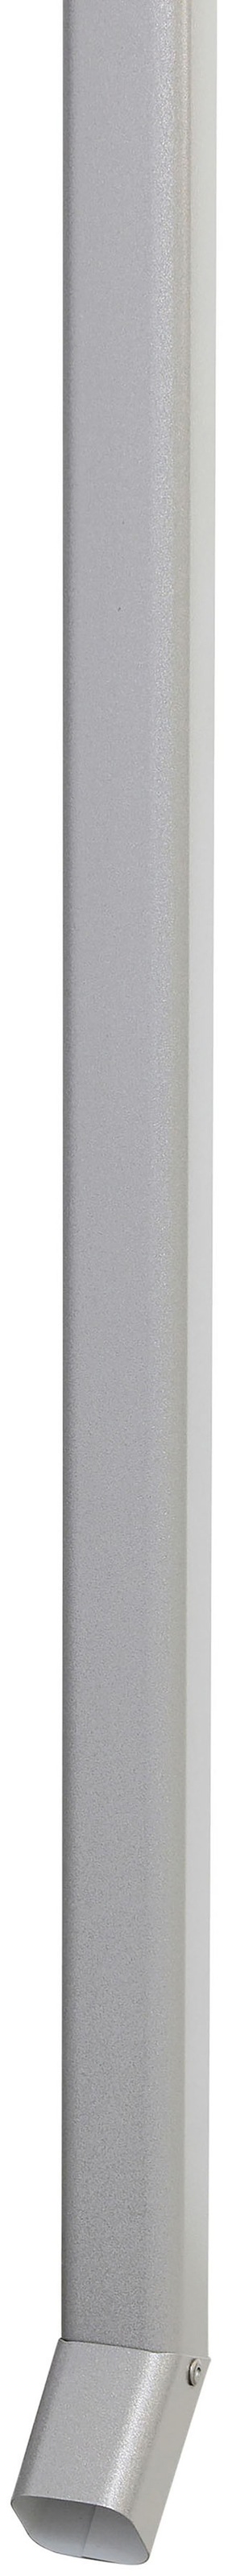 Biohort Regenfallrohr, (Set, 2 tlg.), für Gerätehaus HighLine, aus feuerverzinktem Stahl